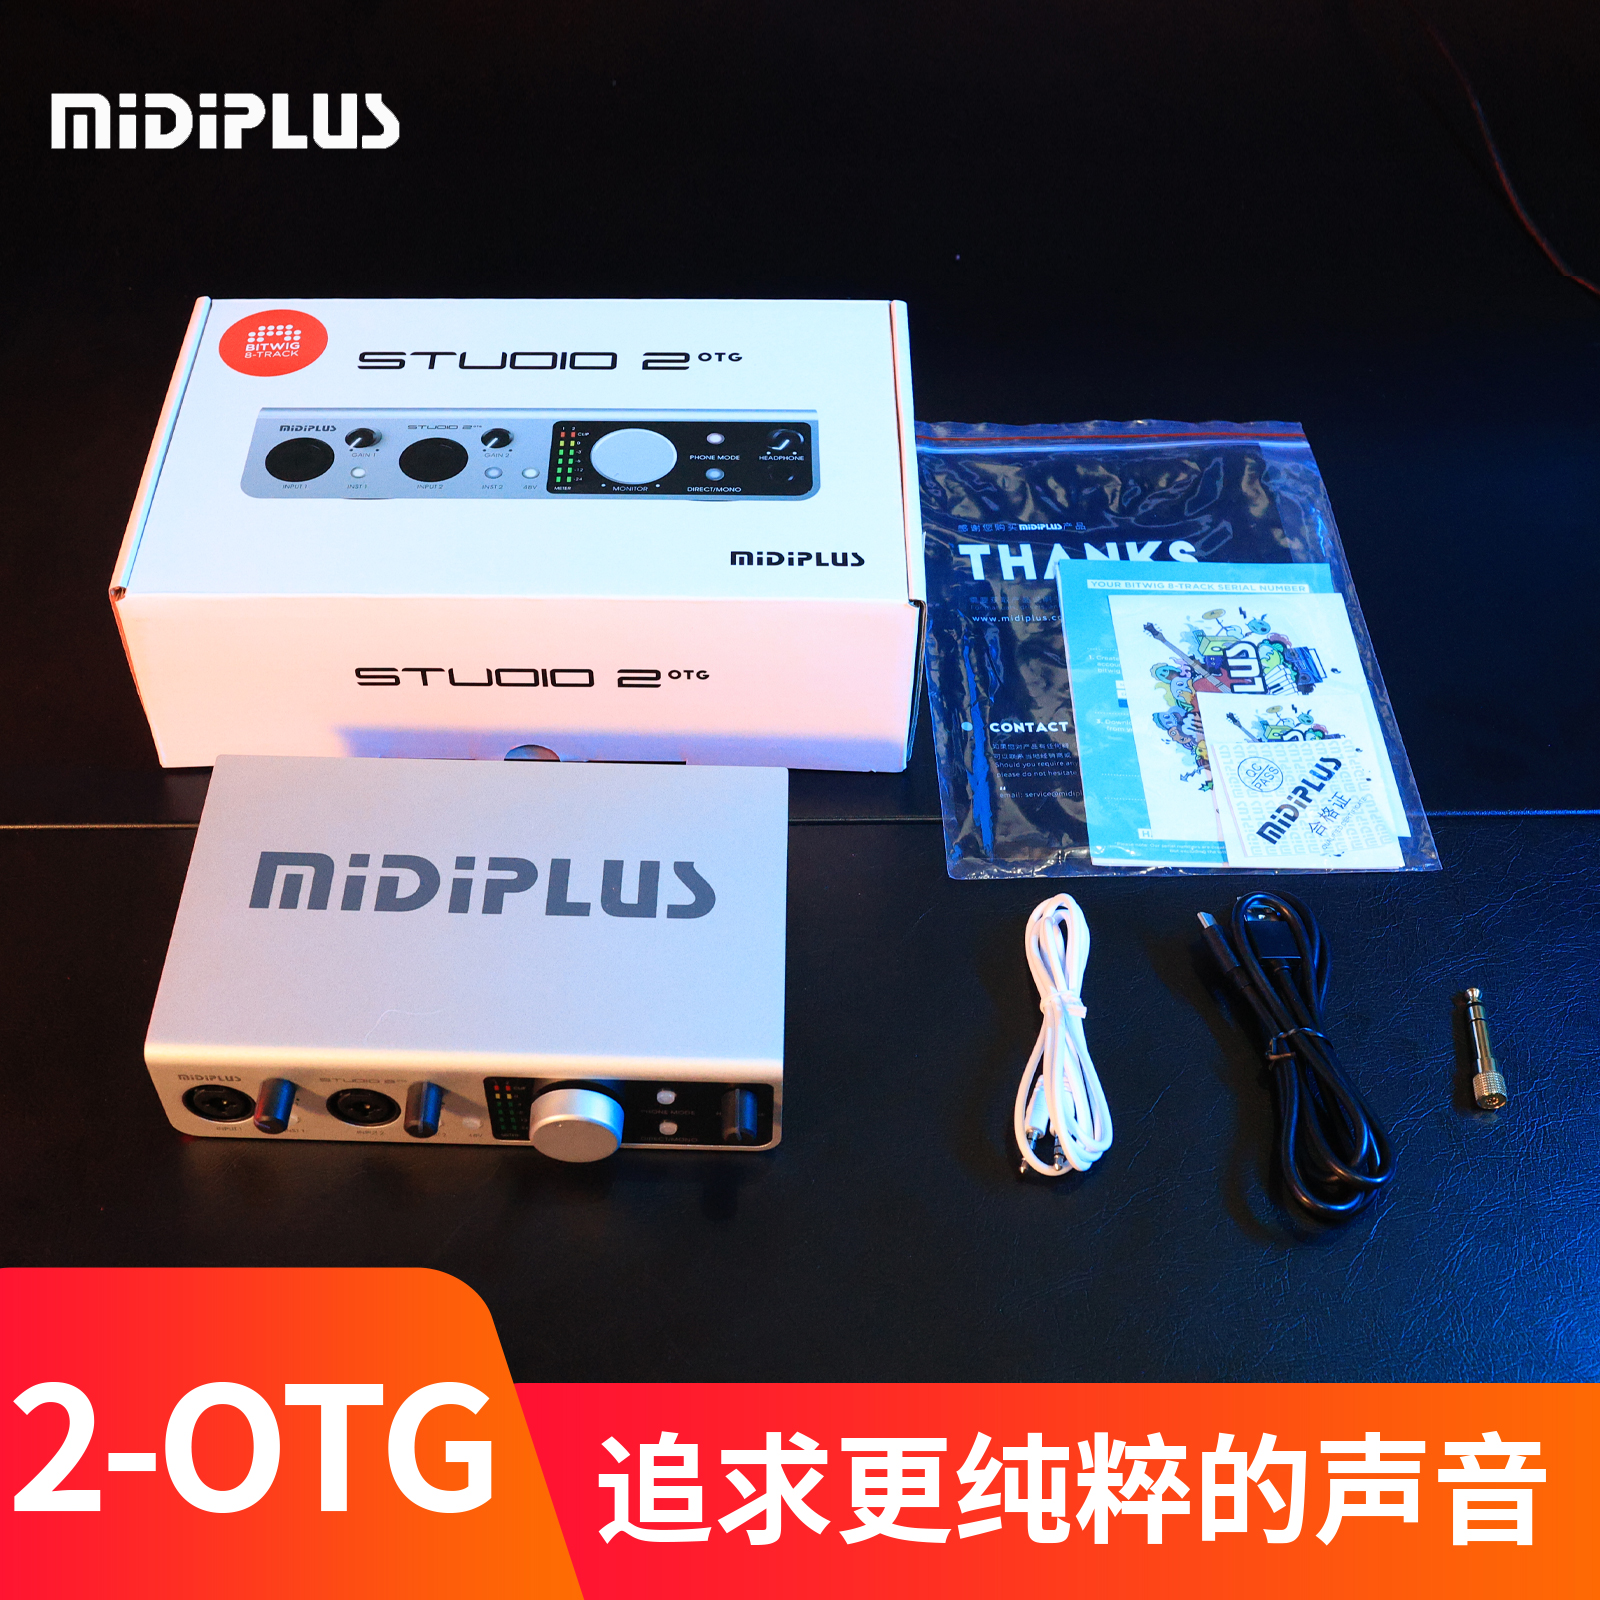 Midiplus studio 2 otg专业录音直播K歌声卡手机电脑主播外置声卡-图3